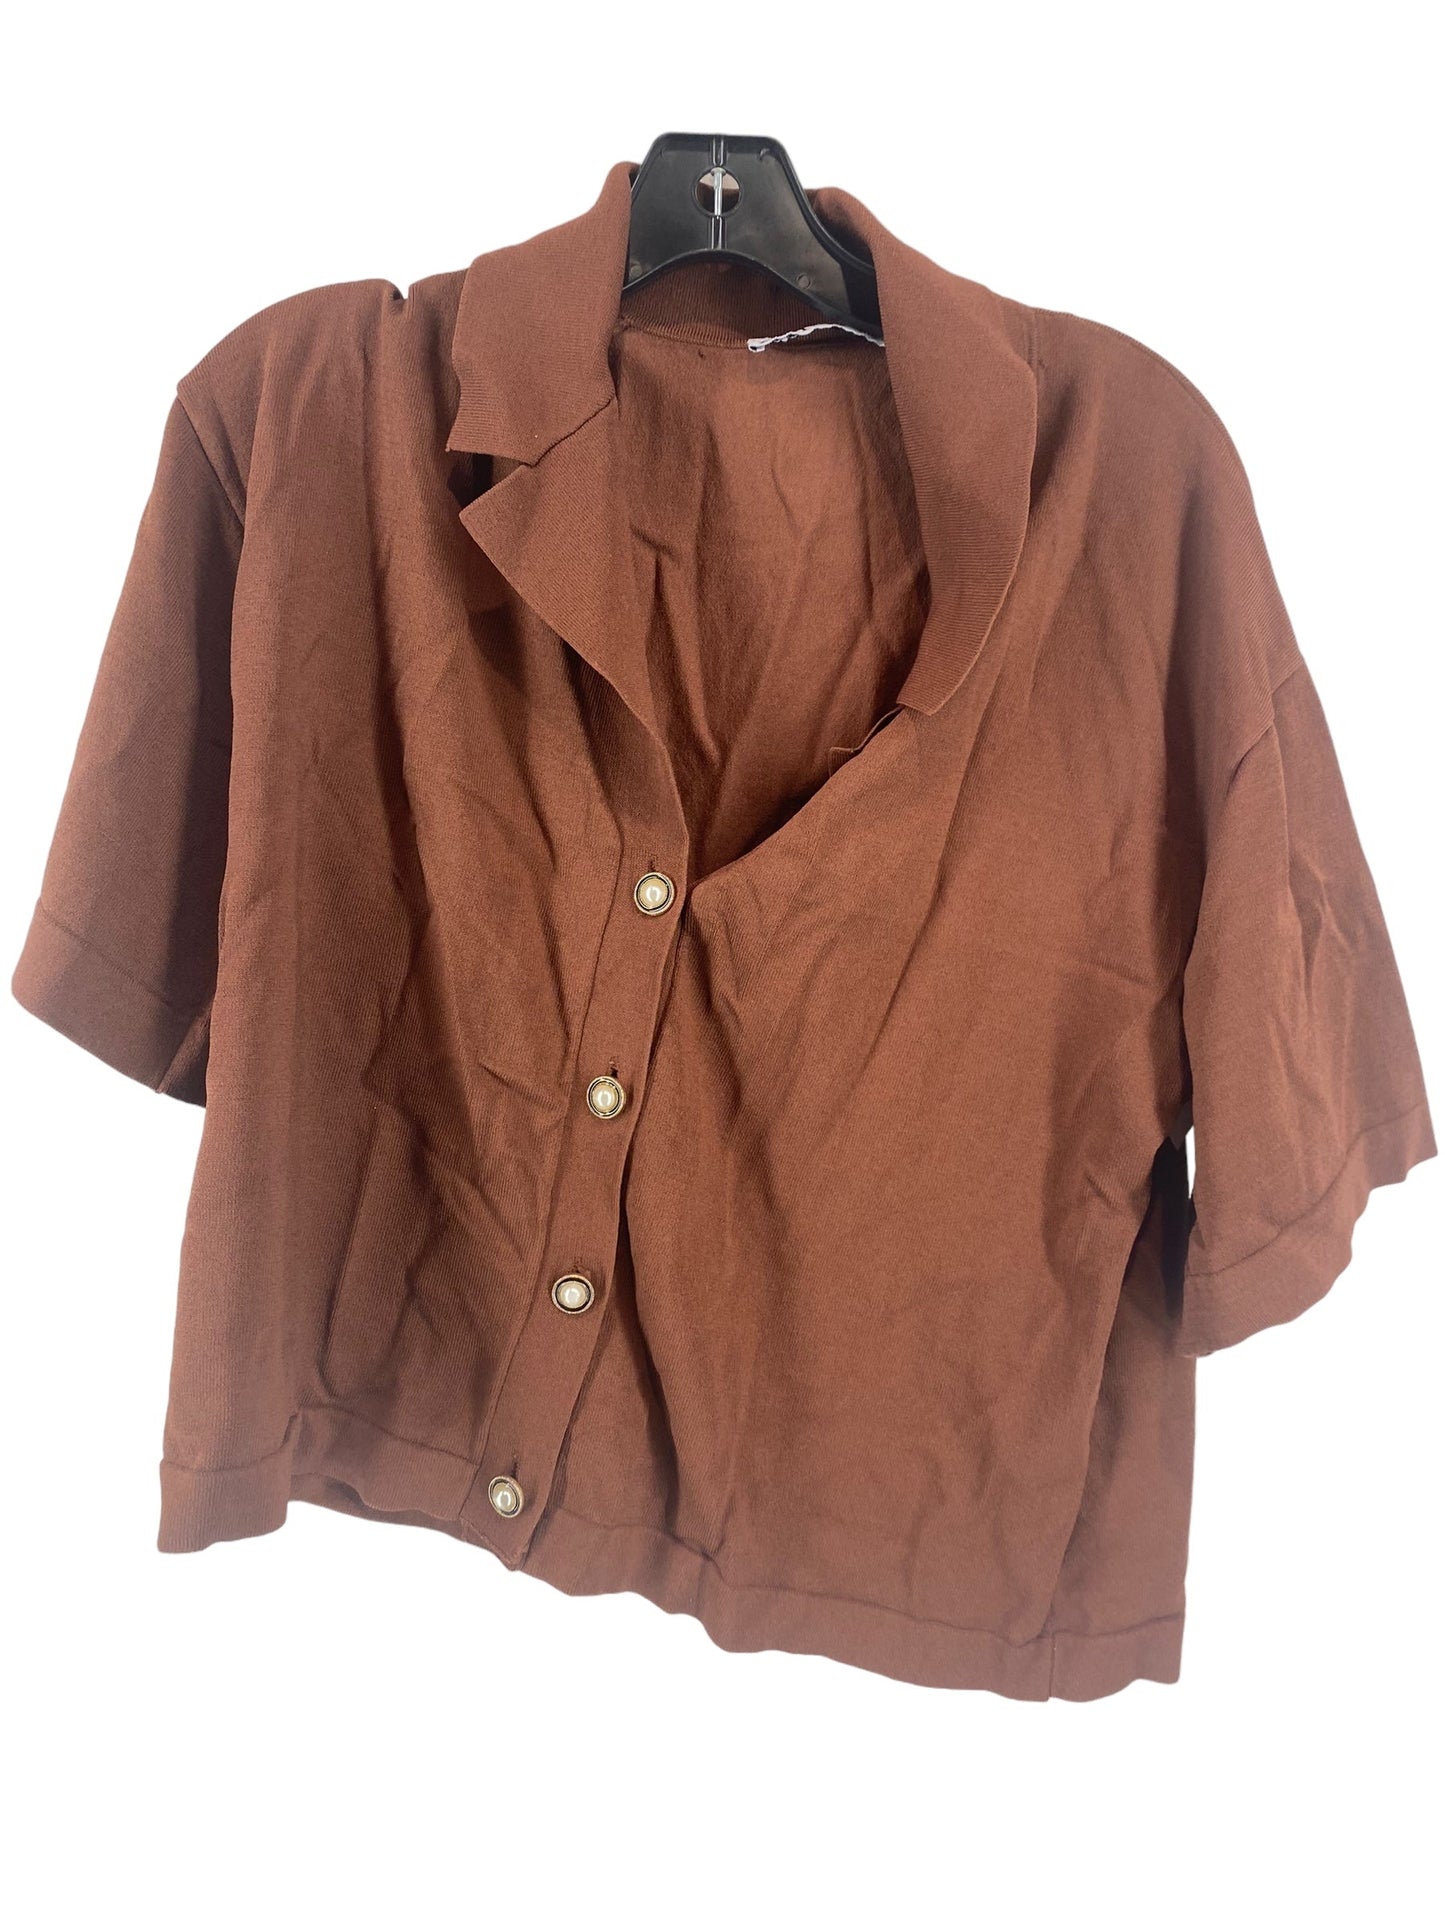 Brown Top Short Sleeve Zara, Size M